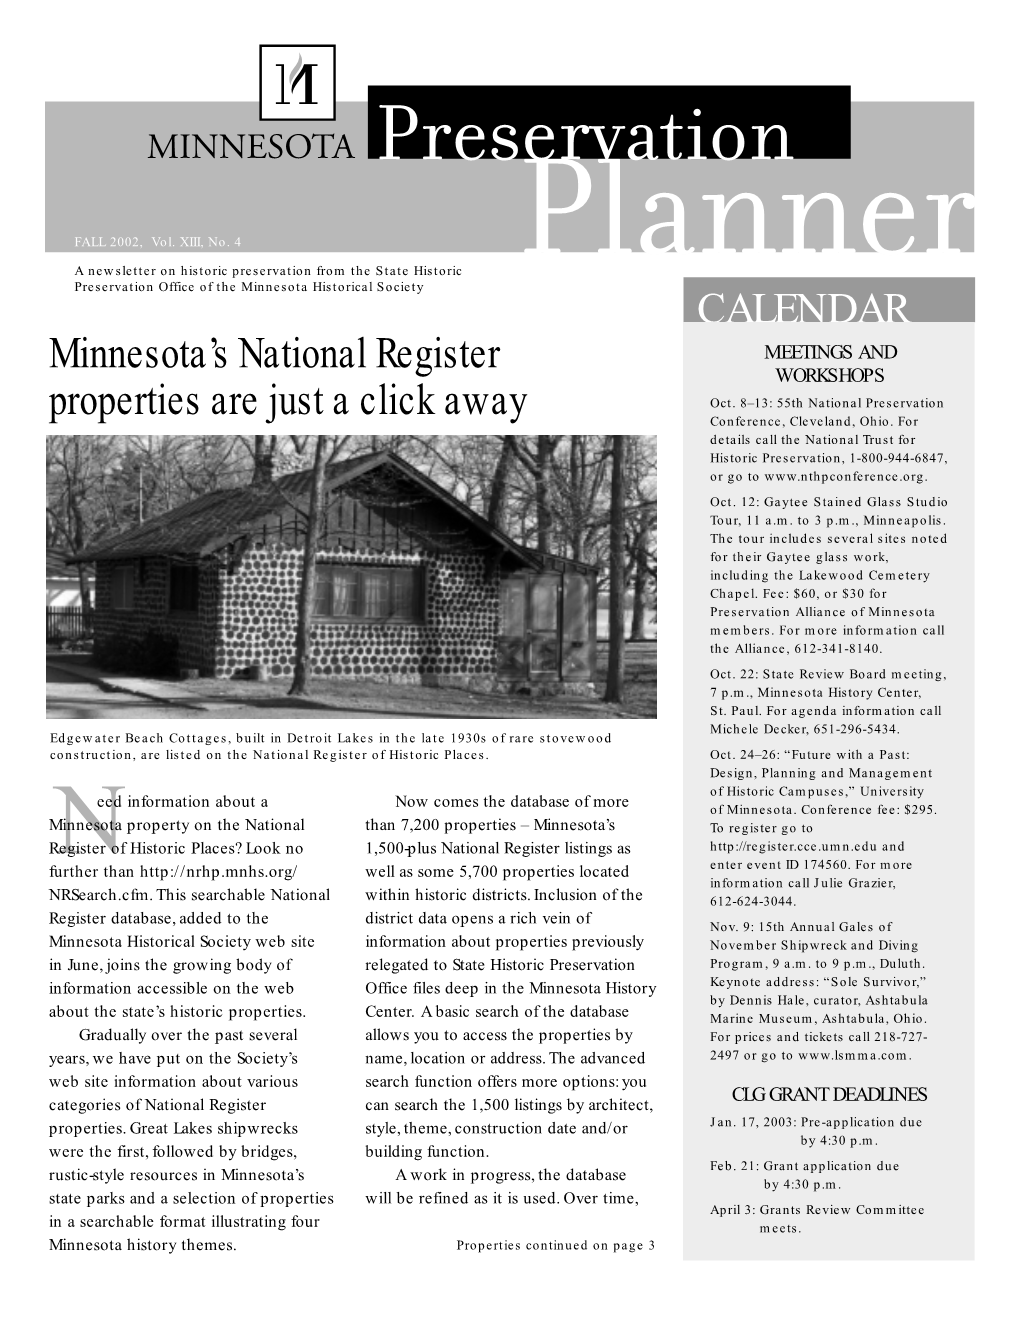 CALENDAR Minnesota's National Register Properties Are Just a Click